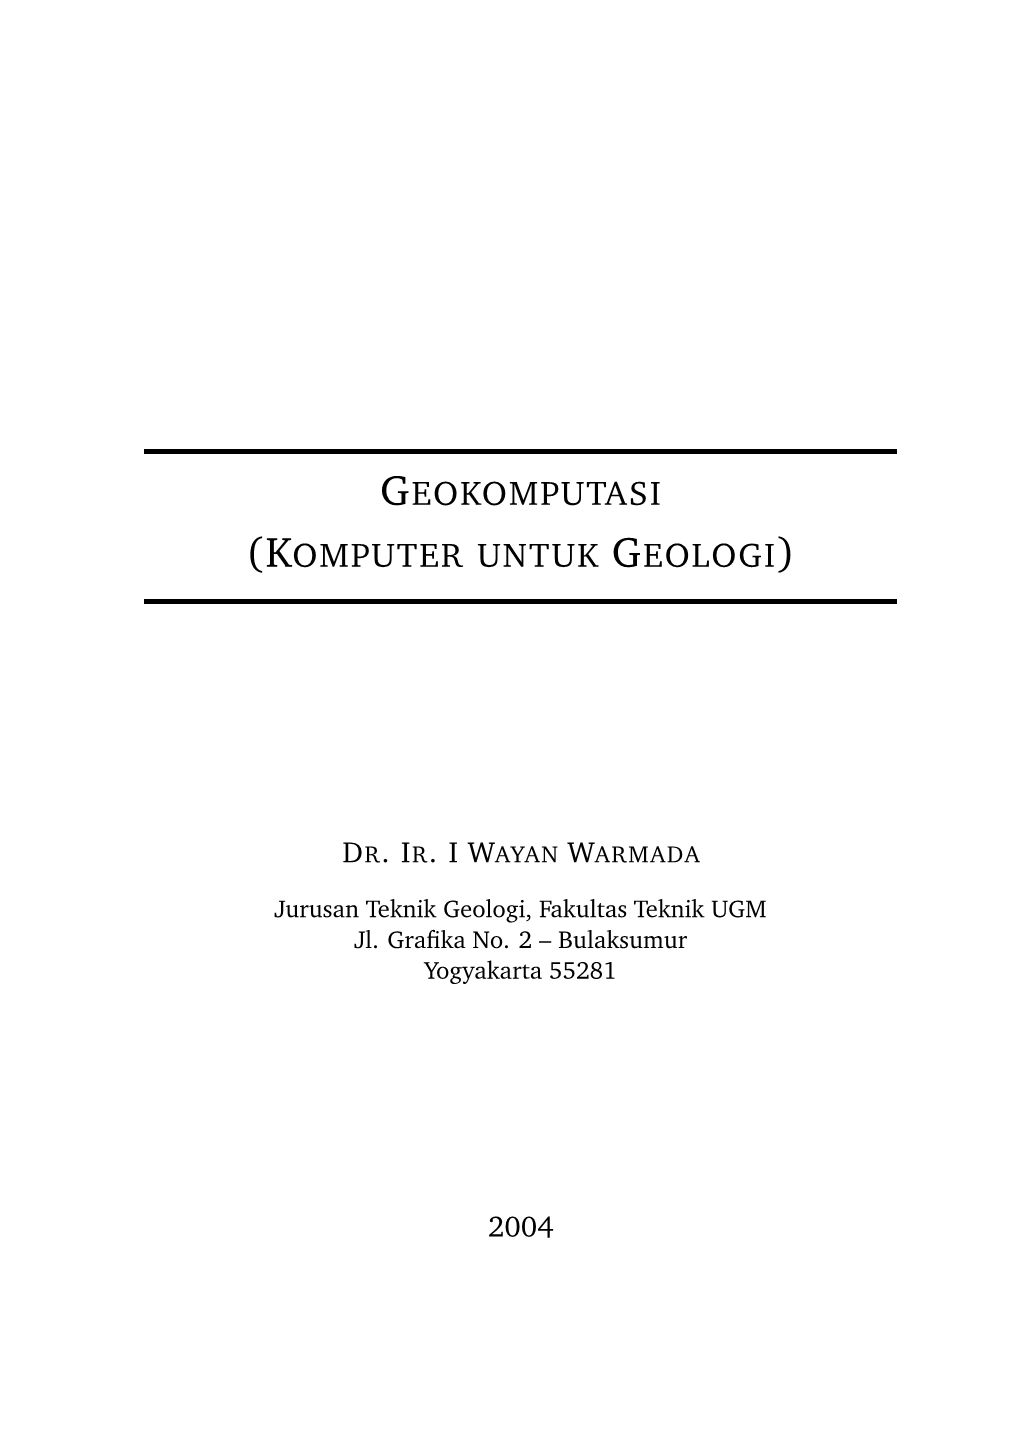 Geokomputasi (Komputer Untuk Geologi)